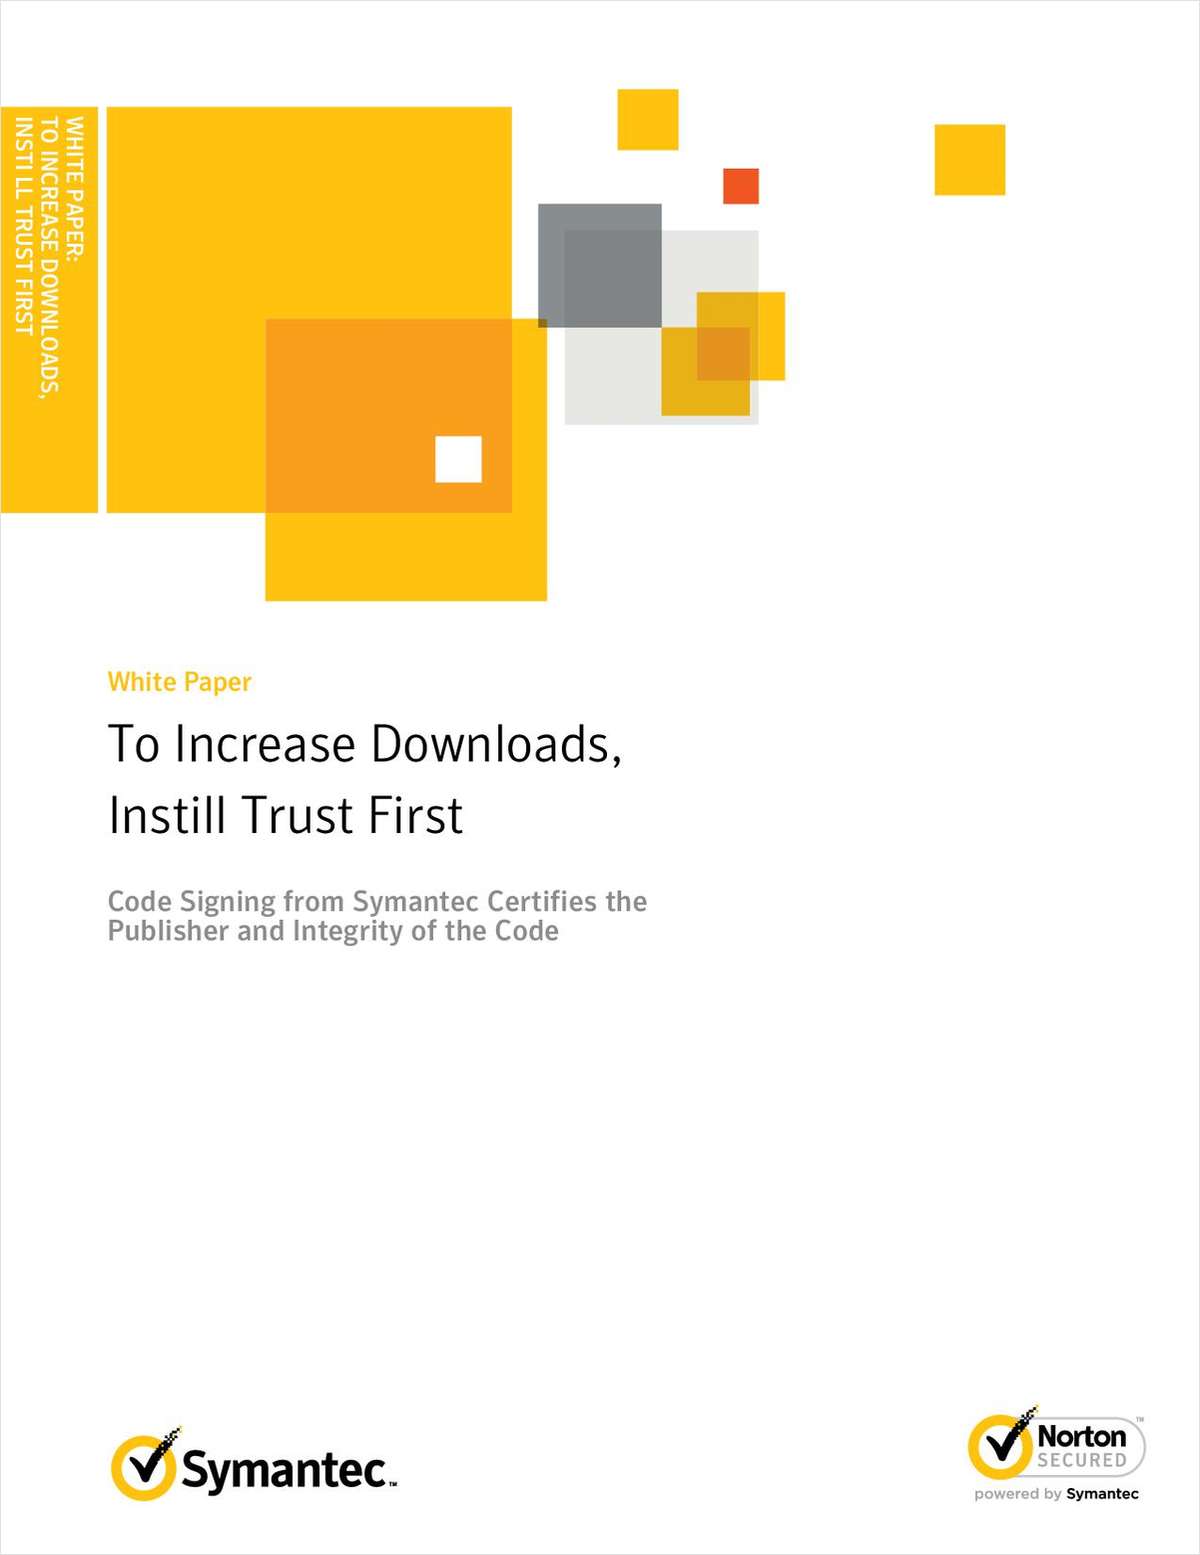 To Increase Downloads, Instill Trust First